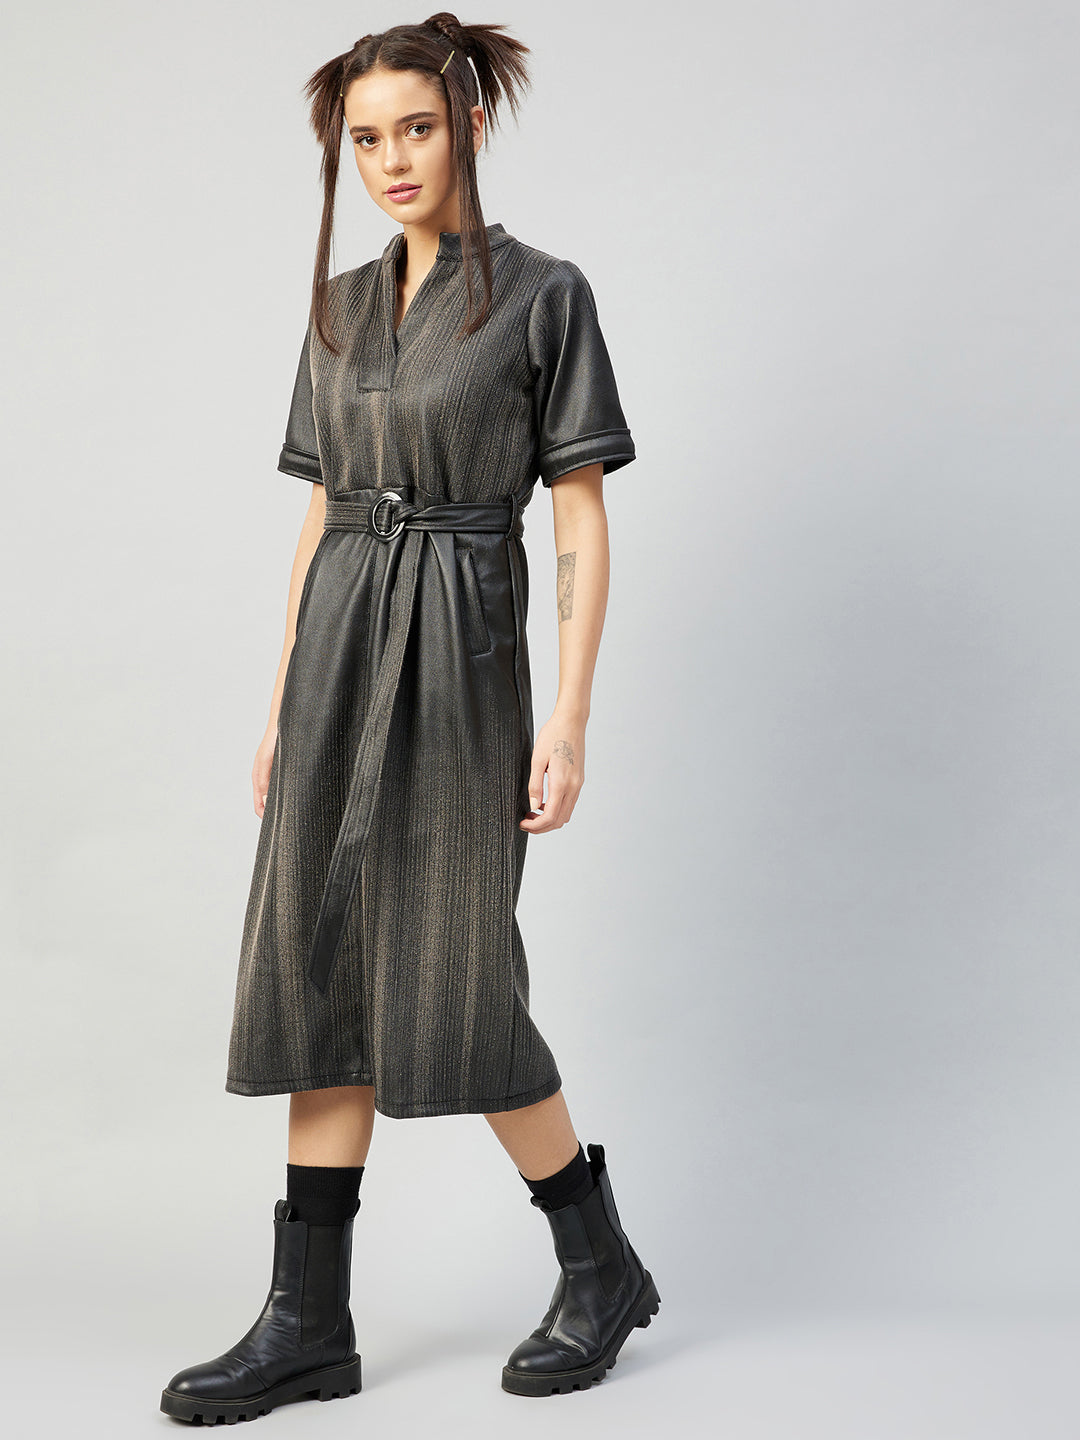 Athena Charcoal Grey Leather Shirt Midi Dress - Athena Lifestyle